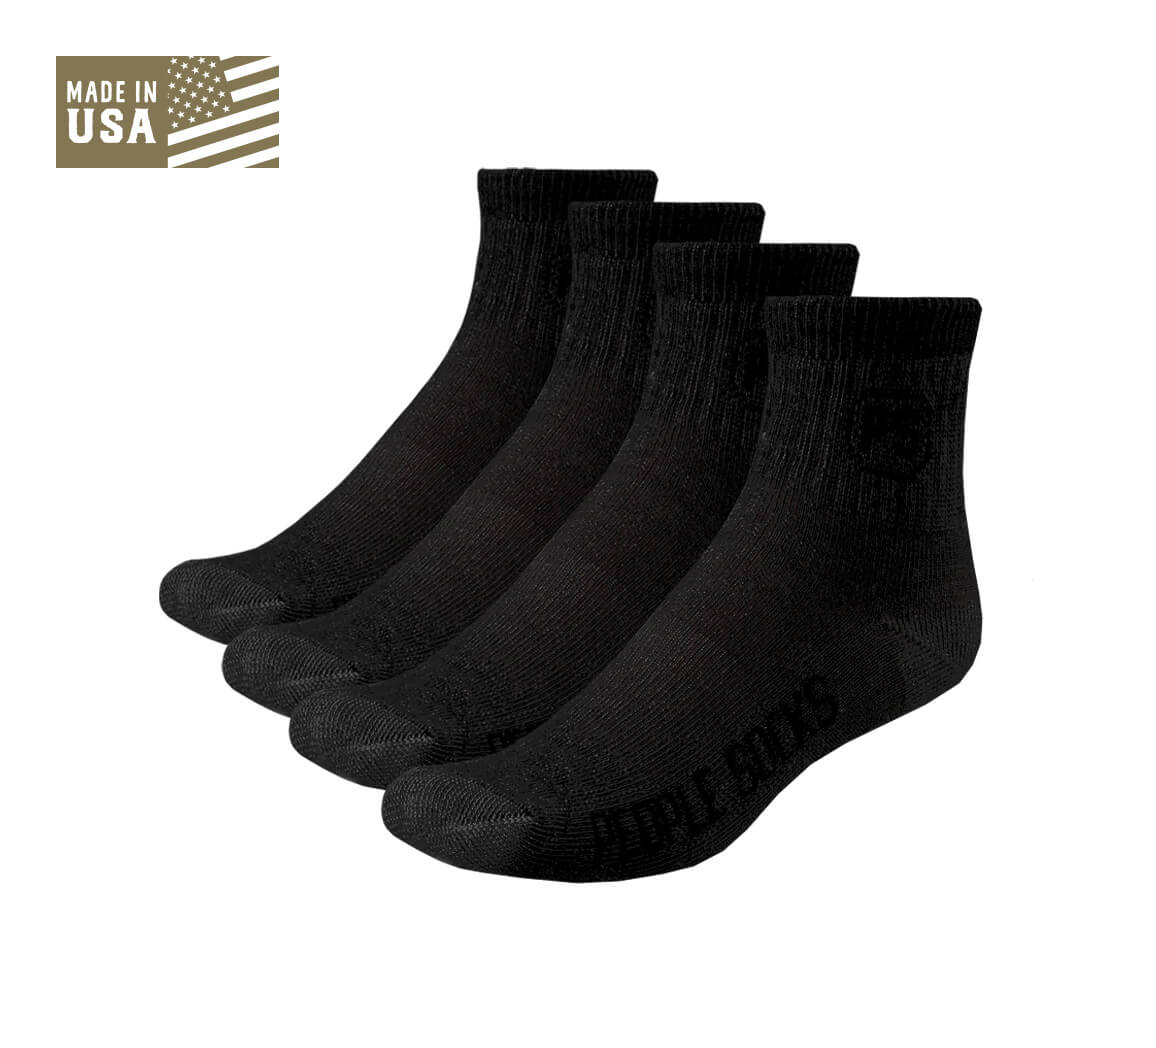 Alo Men's Street Sock - Black/White - Medium/Large | Cotton